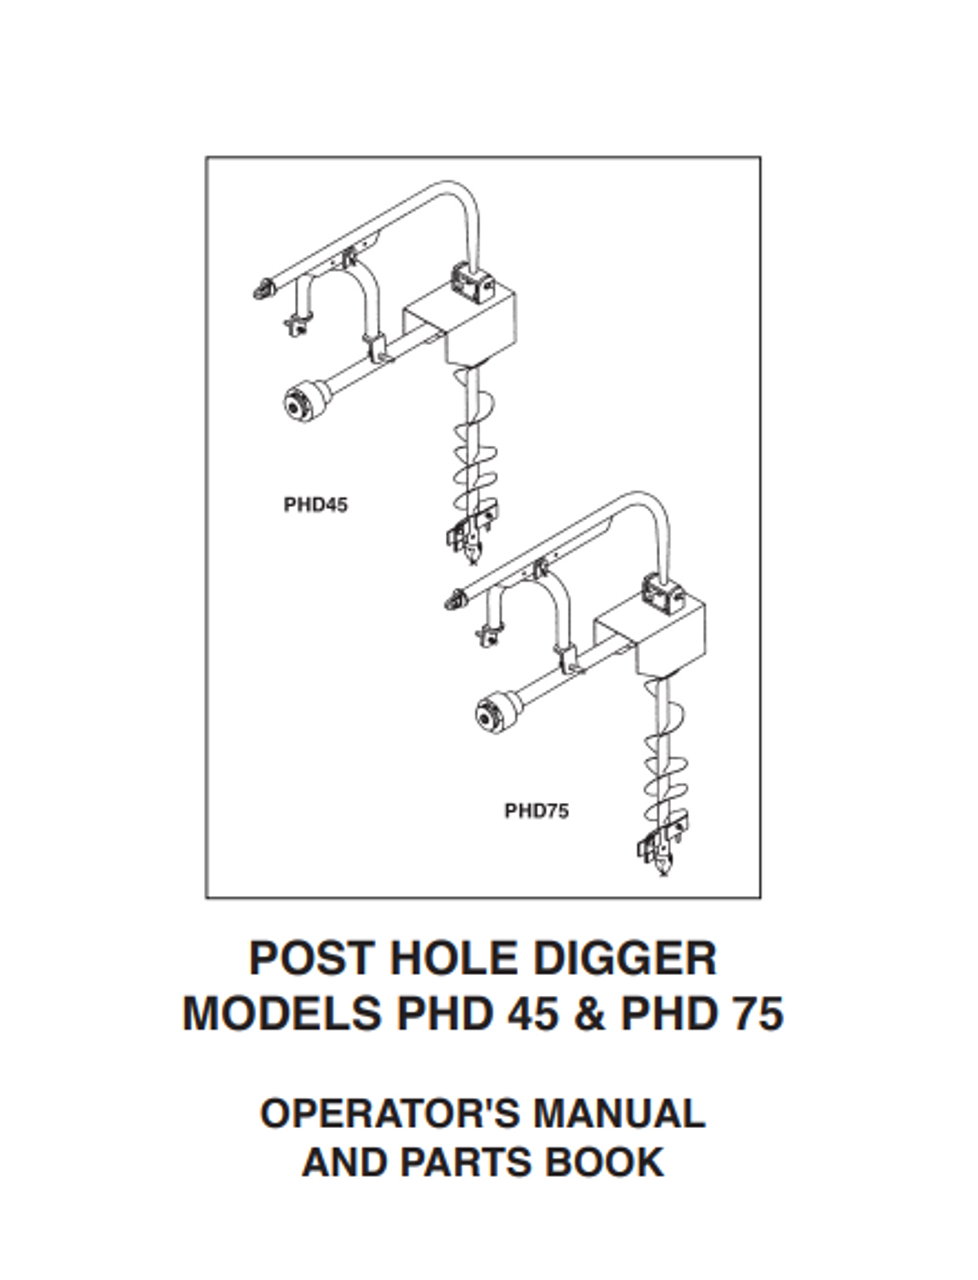 Post Hole Digger Operator's Manual